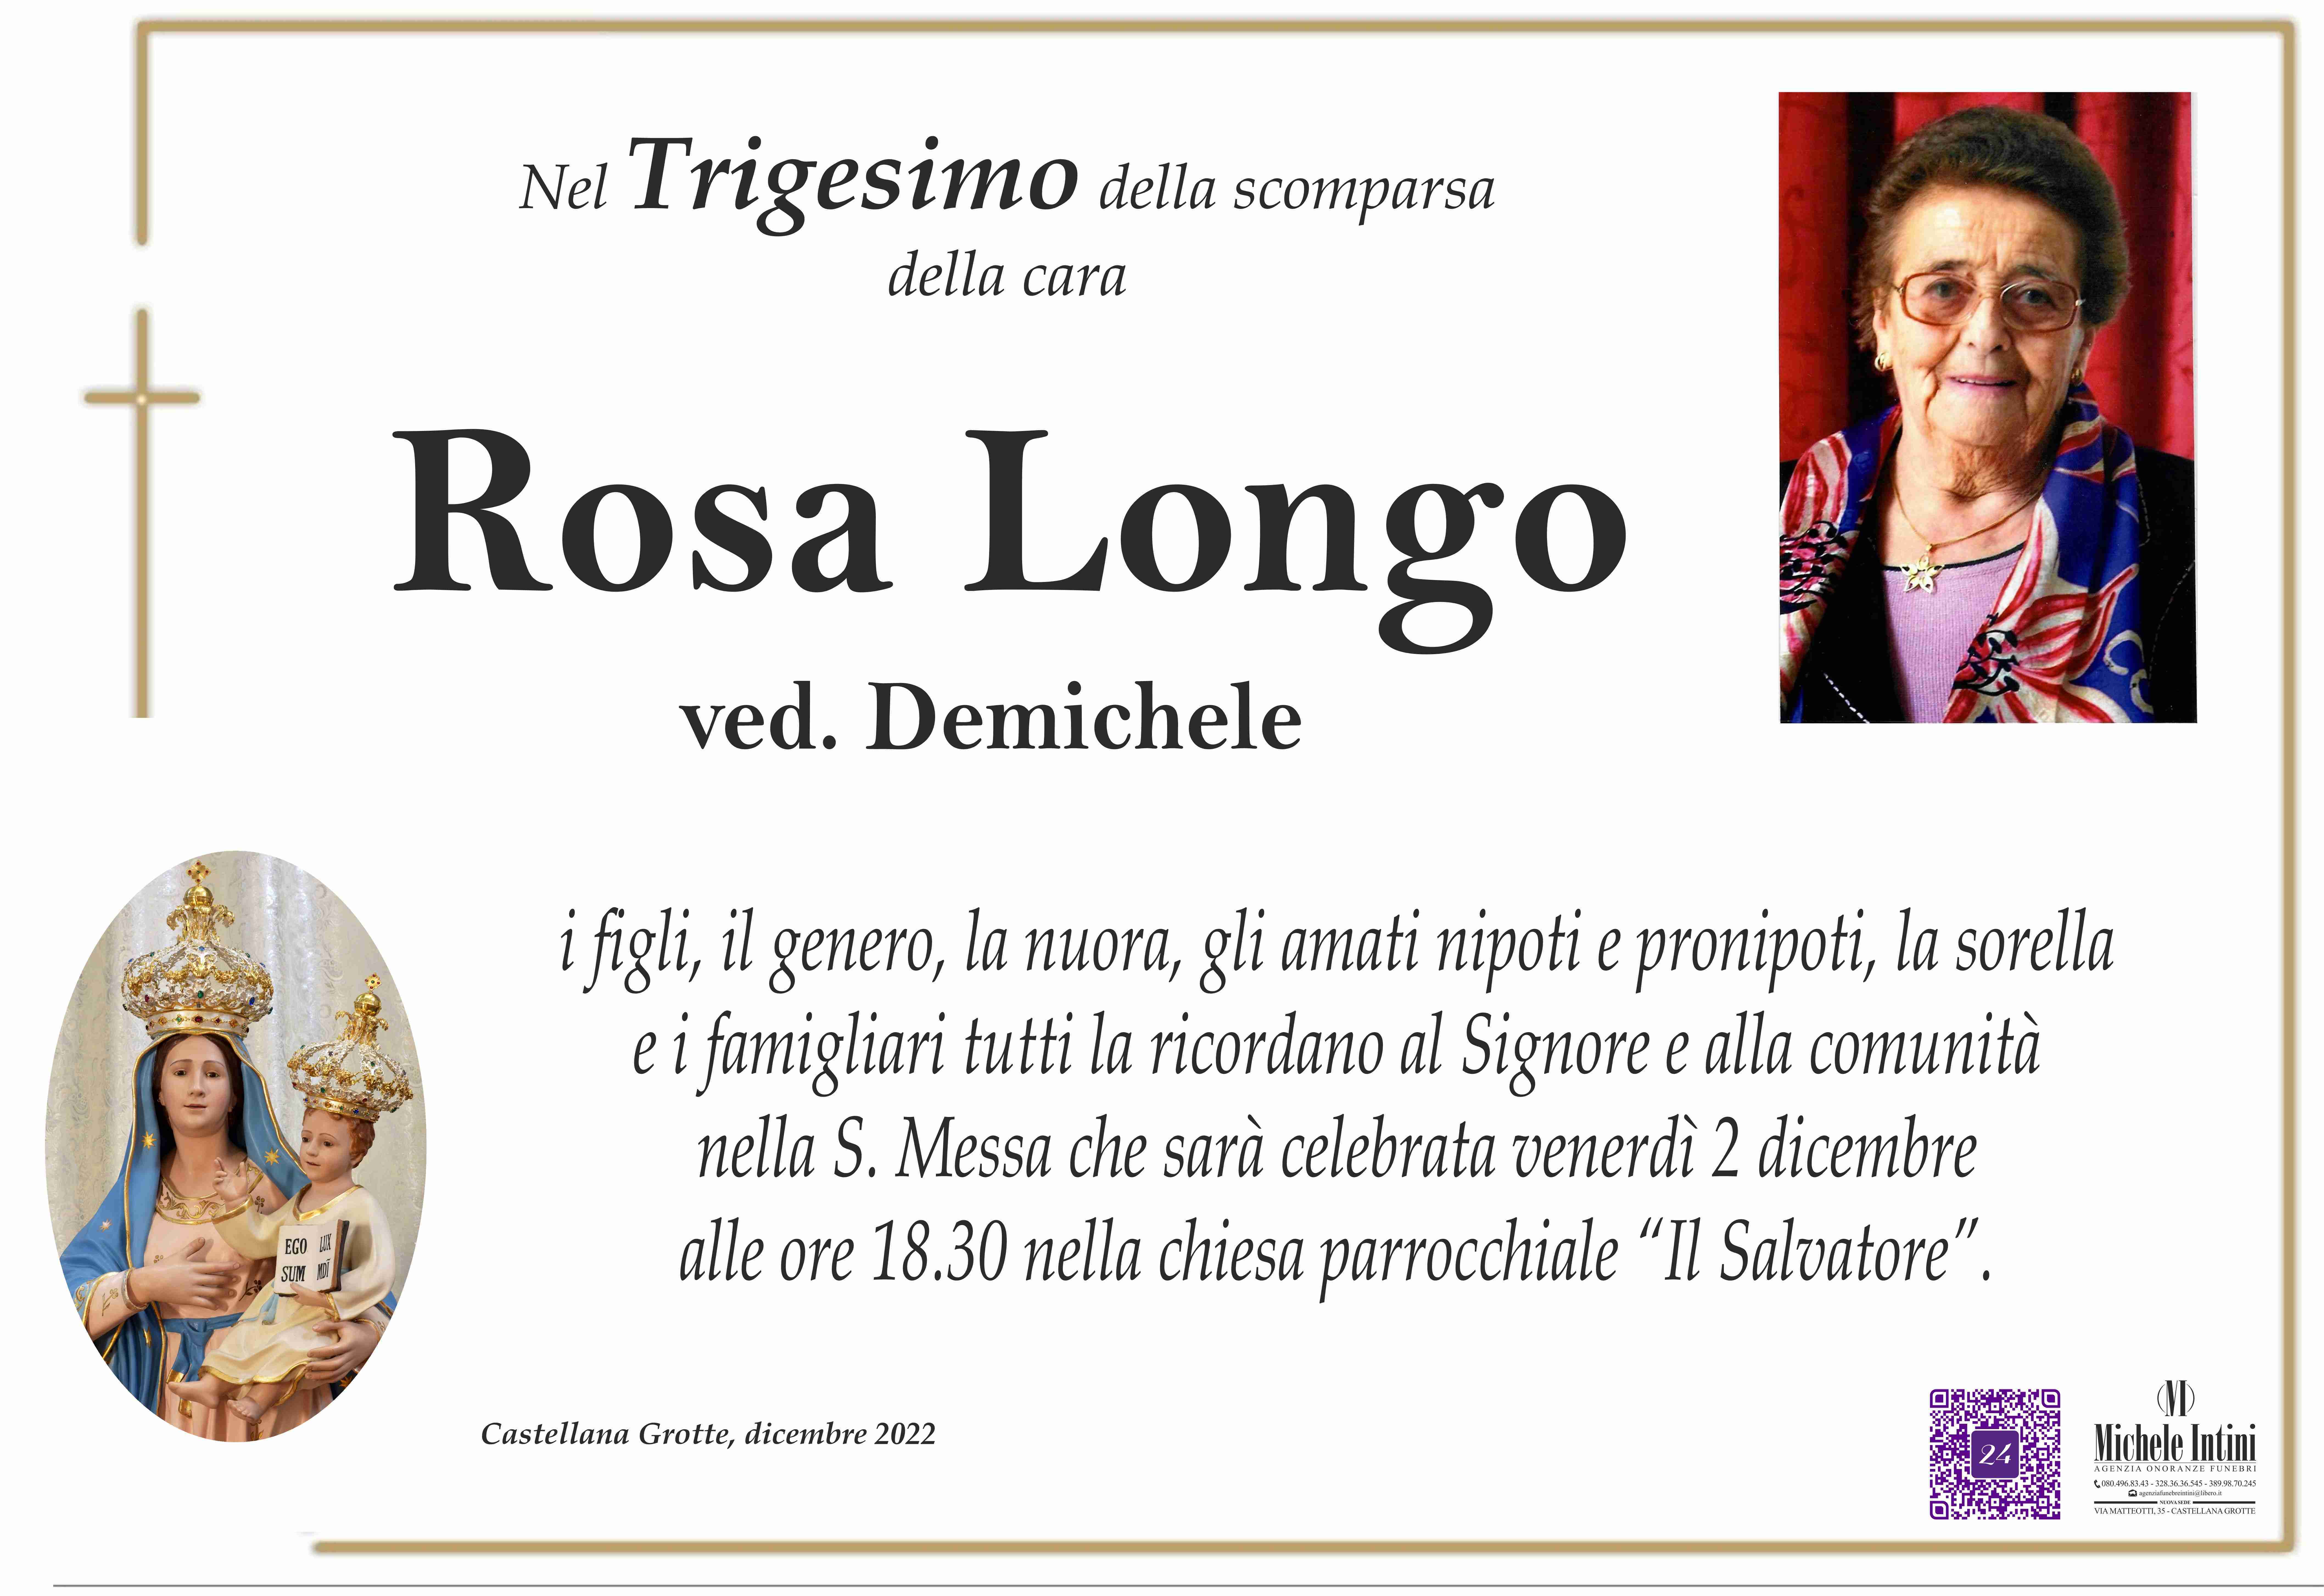 Rosa Longo